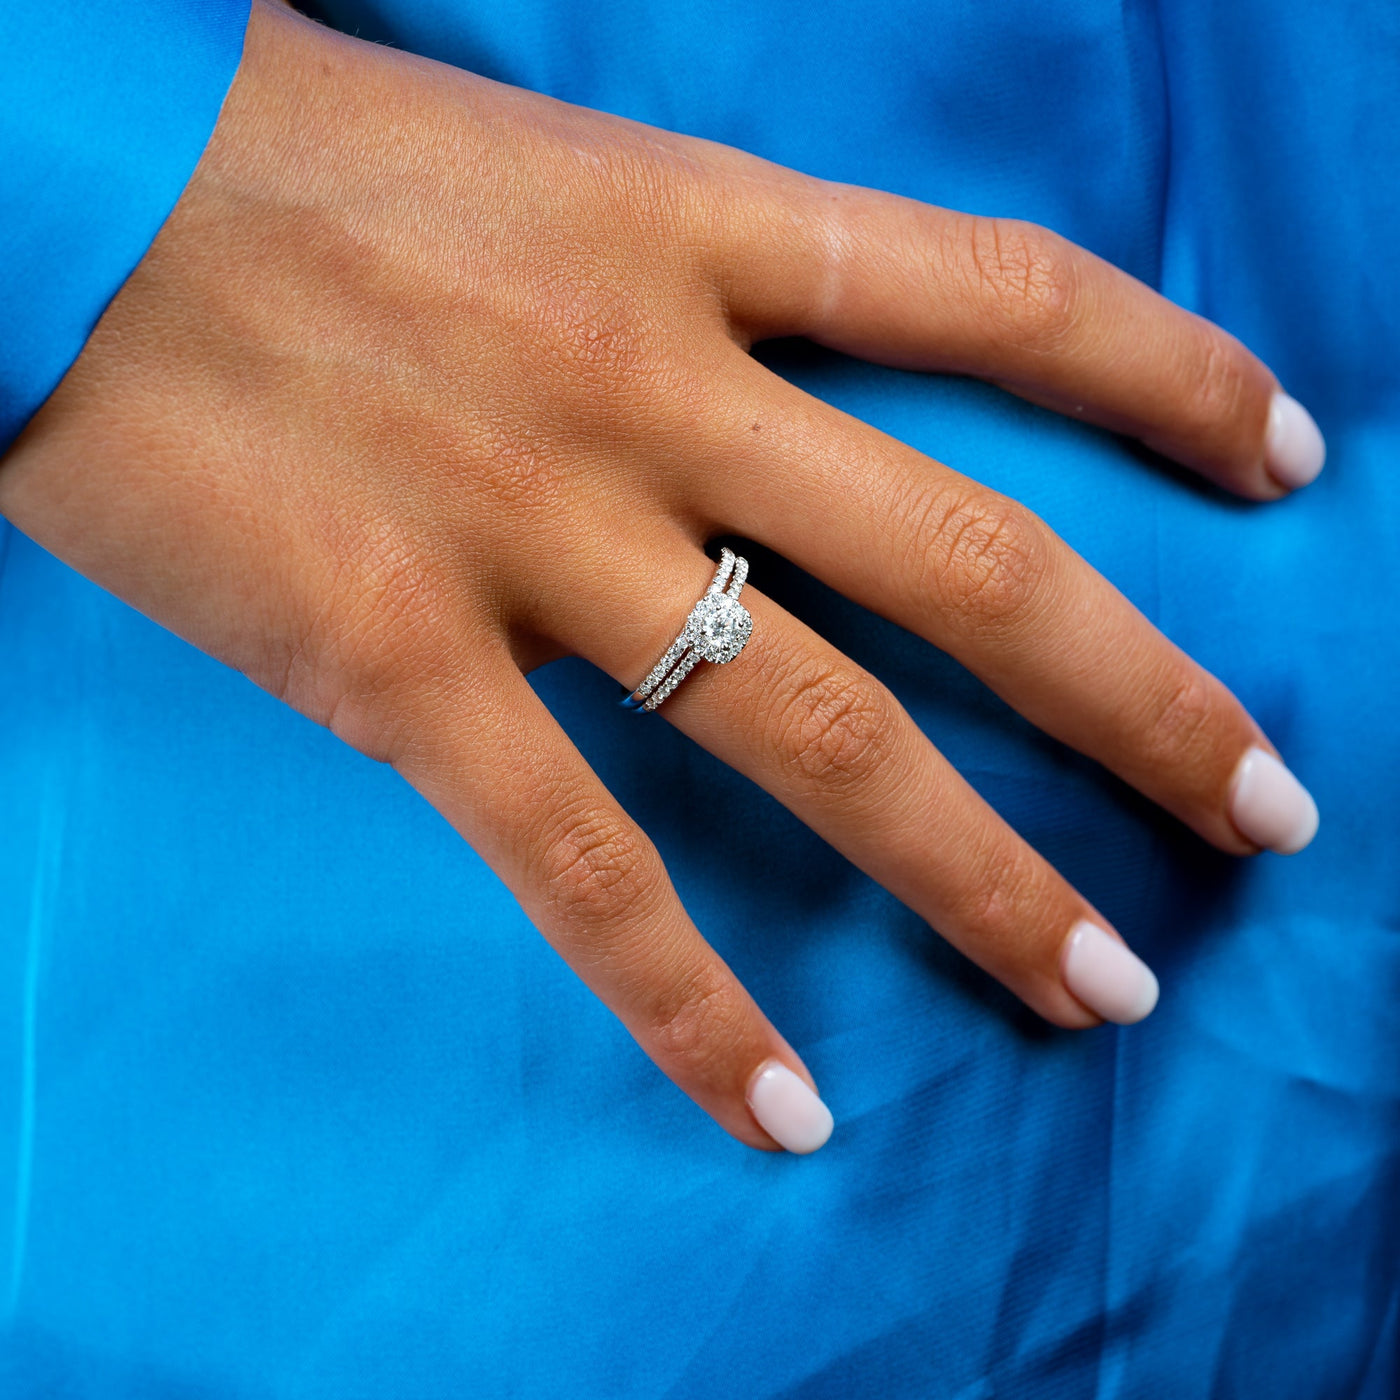 Cushion Diamond Halo Engagement Ring - RNB Jewellery